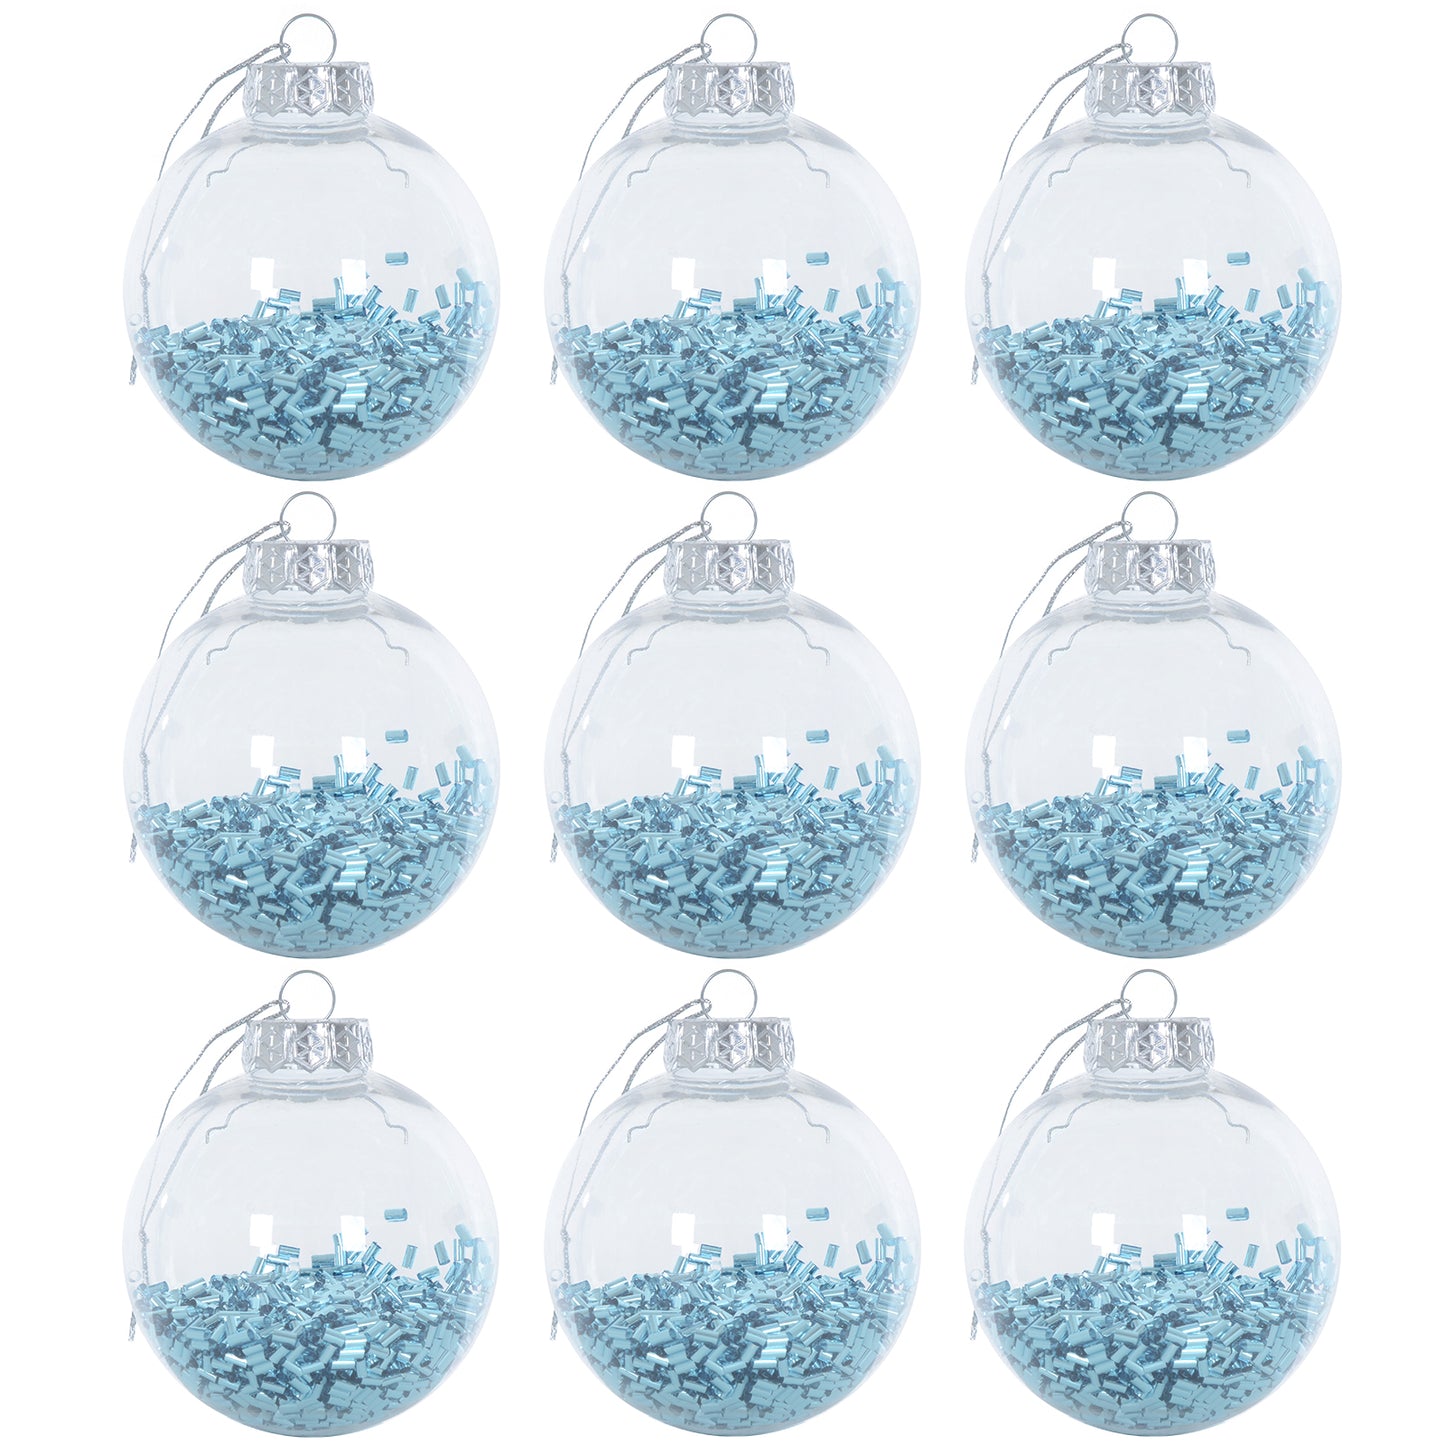 Mr Crimbo 9 x 8cm Foil Filled Shaker Christmas Tree Baubles - MrCrimbo.co.uk -XS6466 - Vivid Blue -Baubles